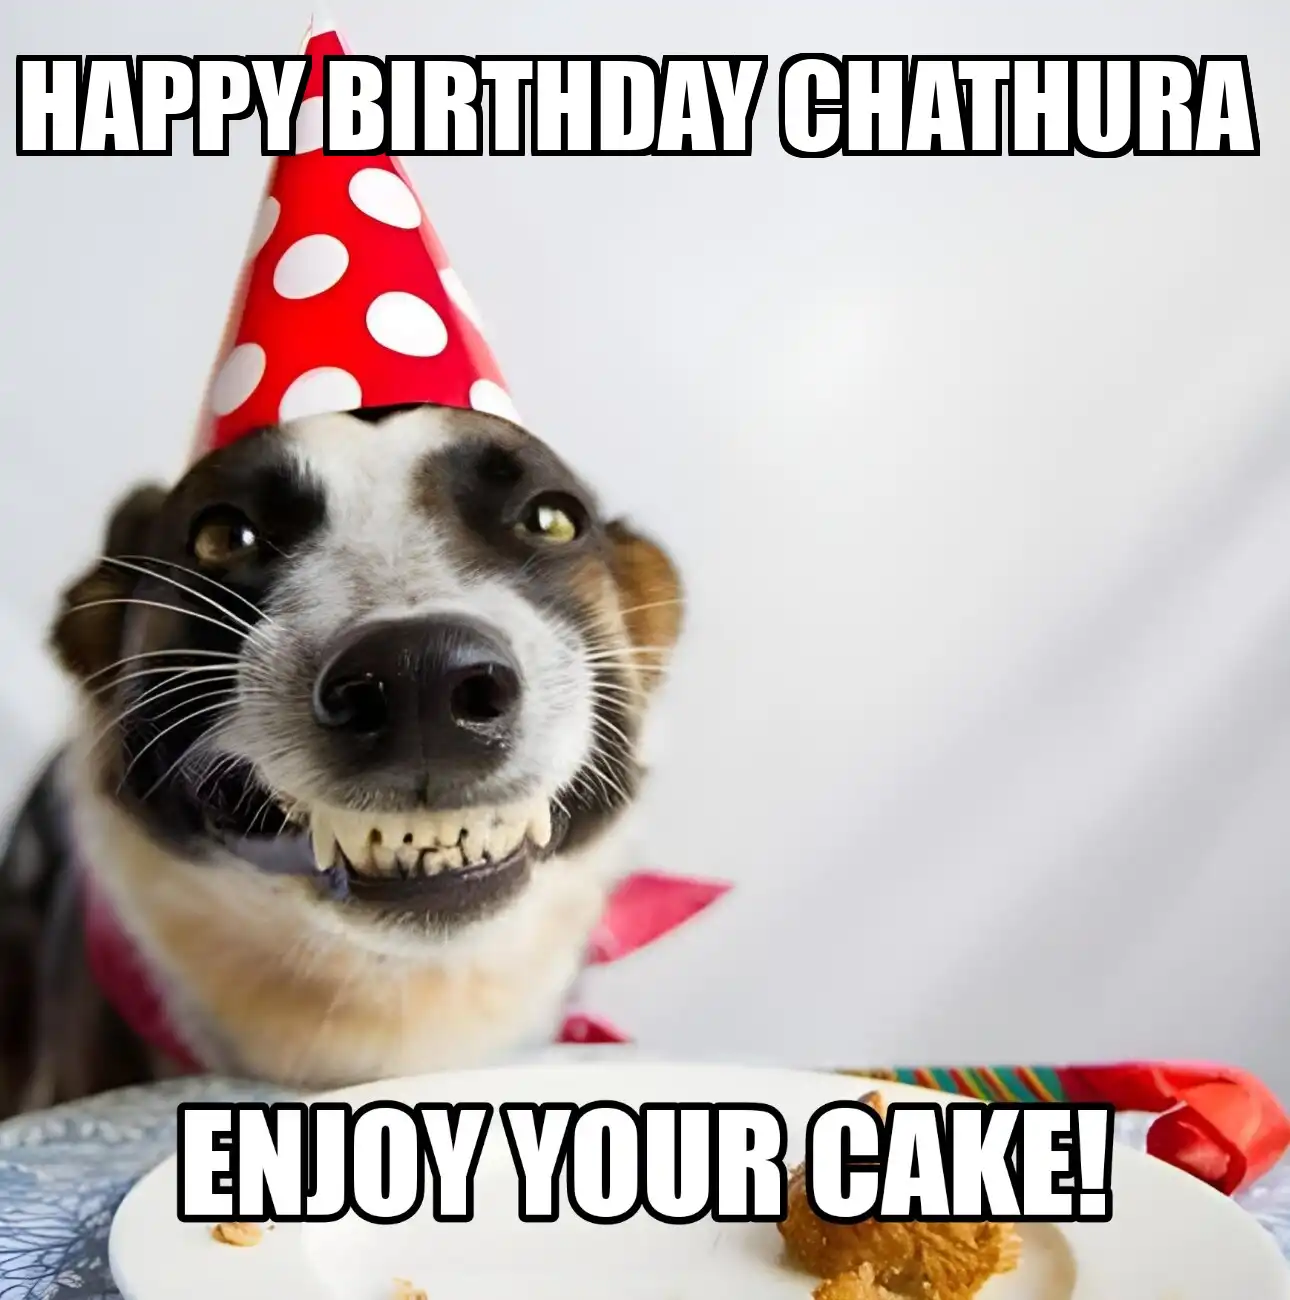 Happy Birthday Chathura Enjoy Your Cake Dog Meme